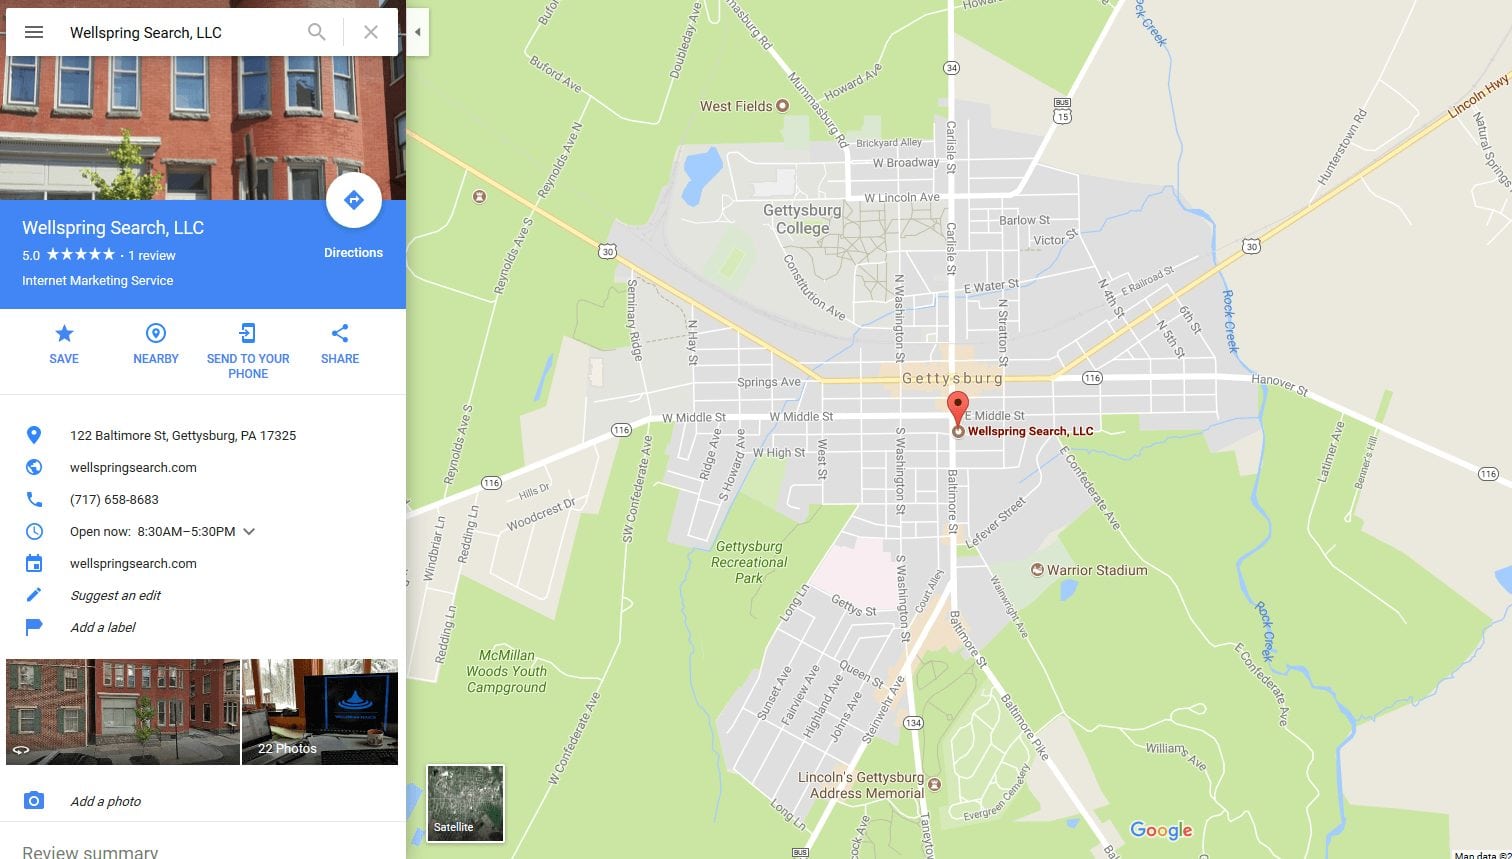 Google Map for 122 Baltimore Street Gettysburg PA 17325